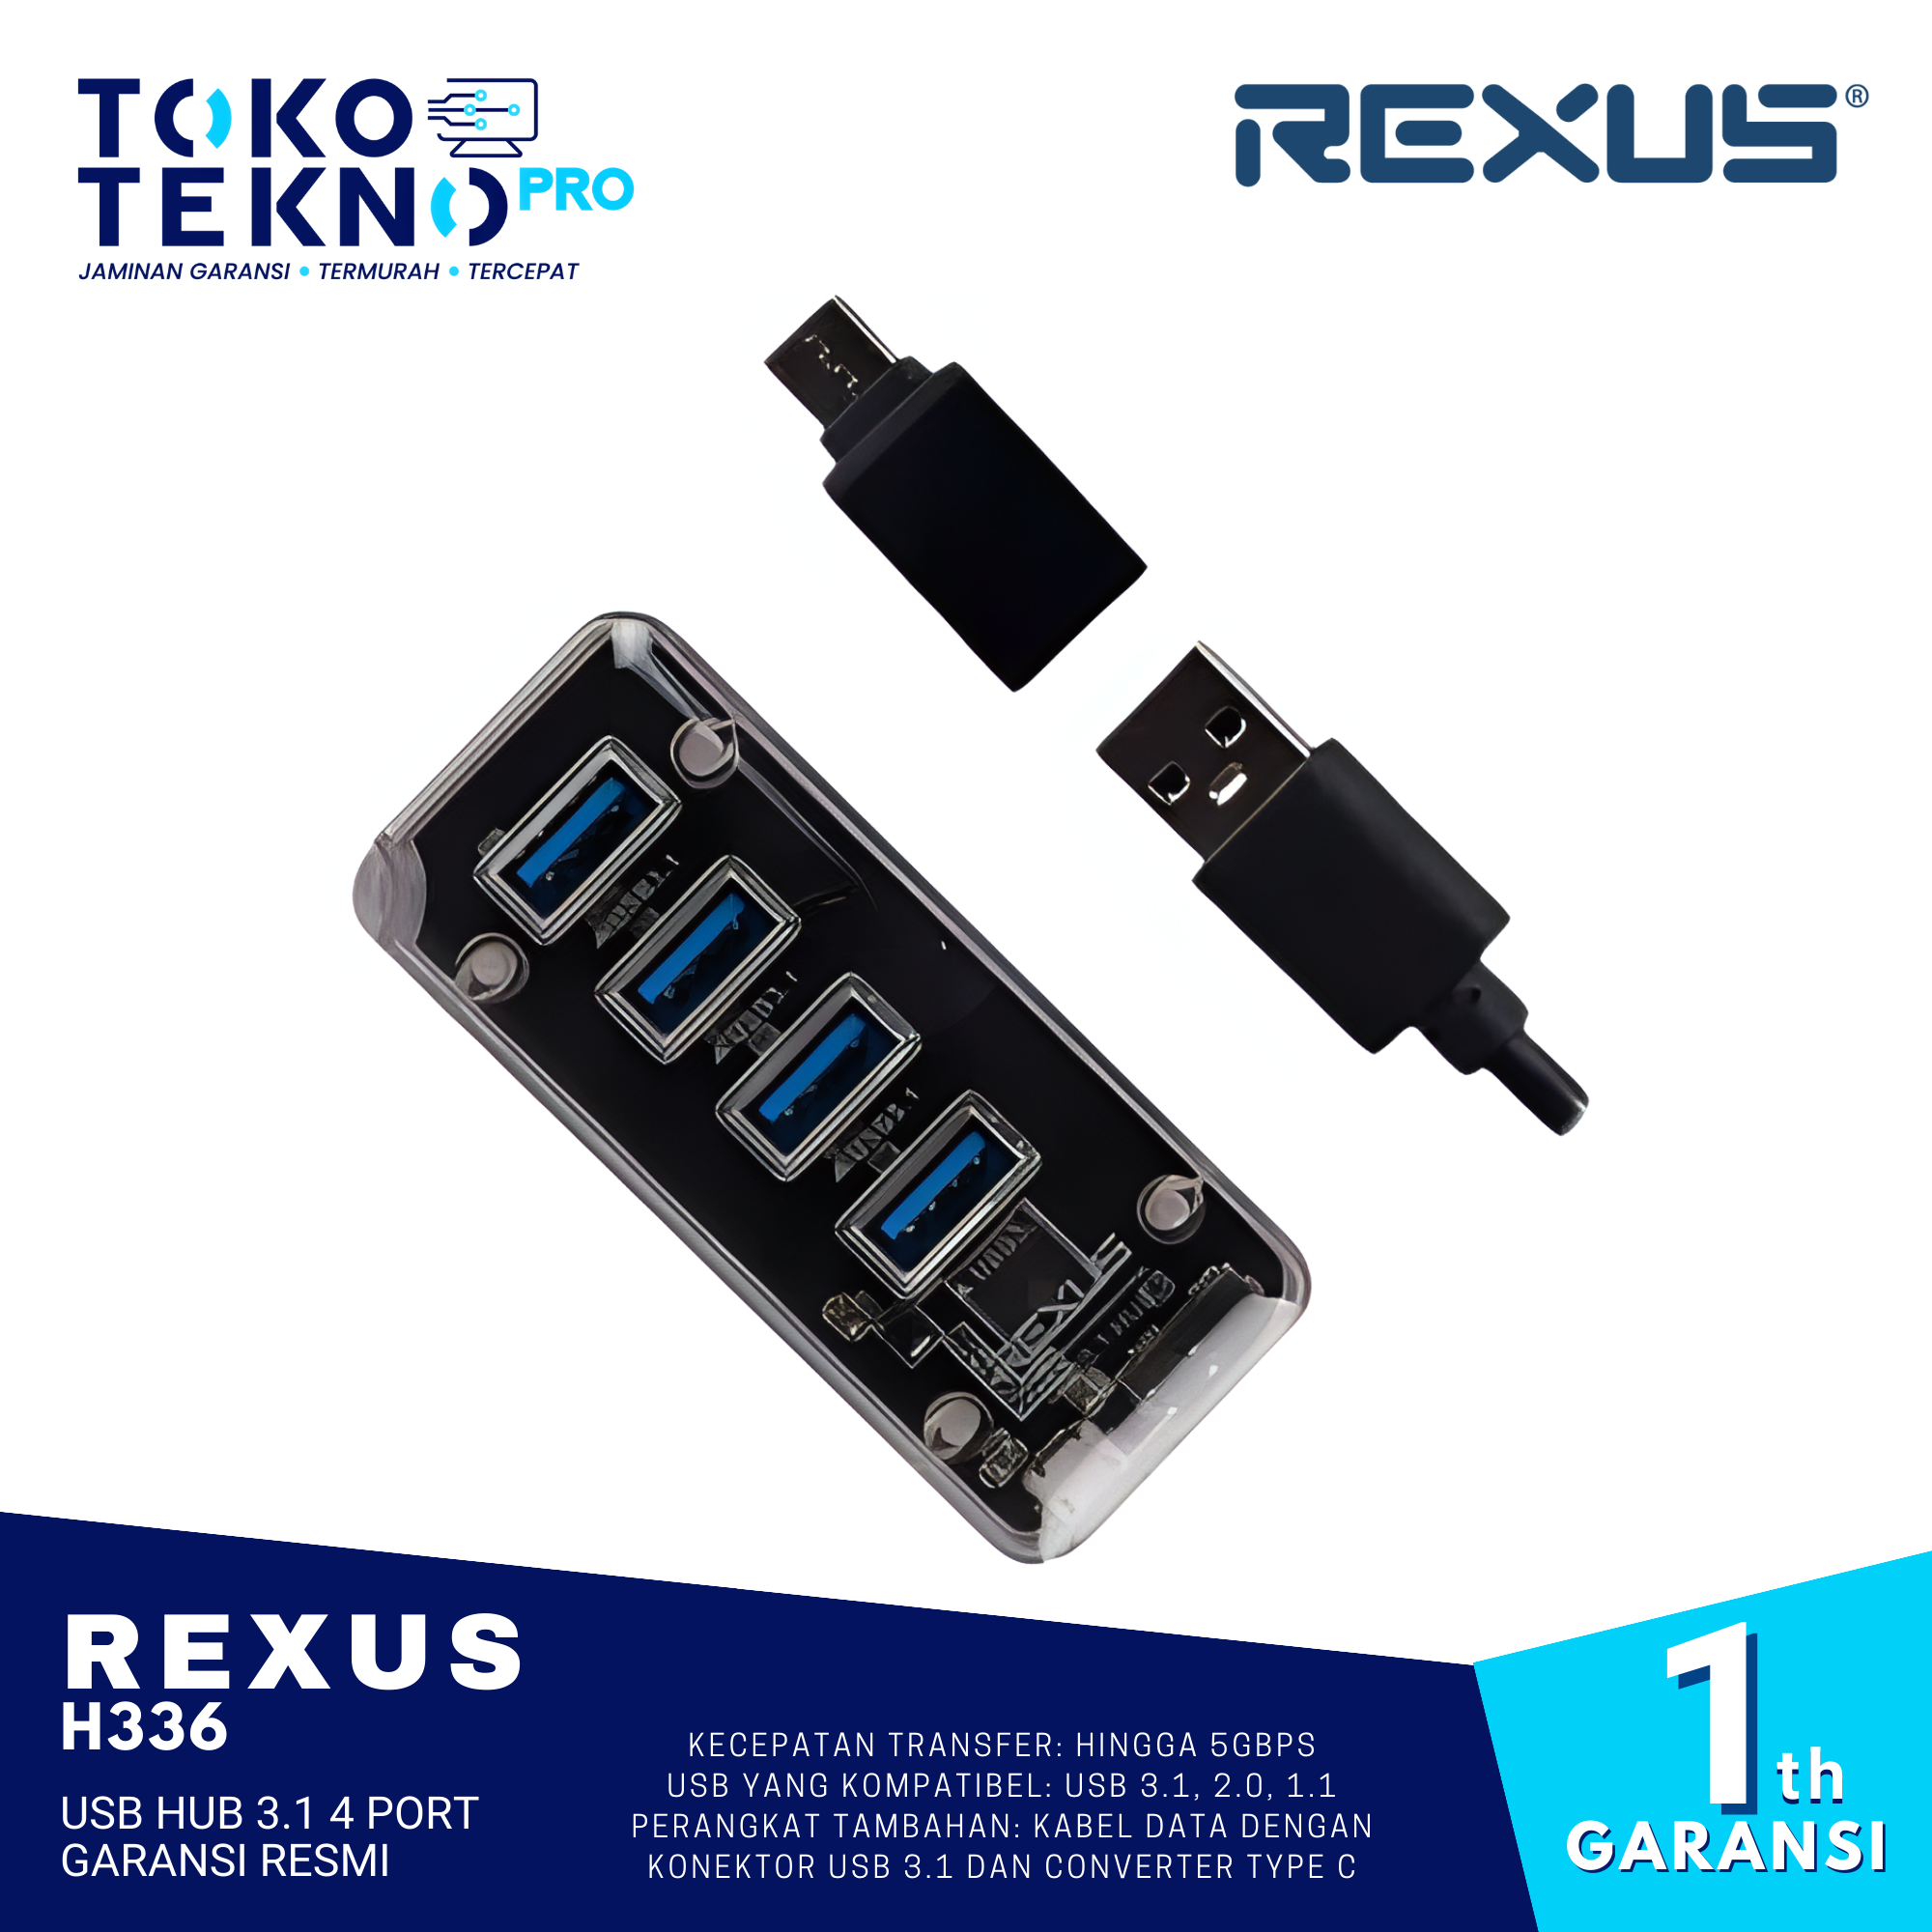 Rexus H336 USB Hub 3.1 4 Port